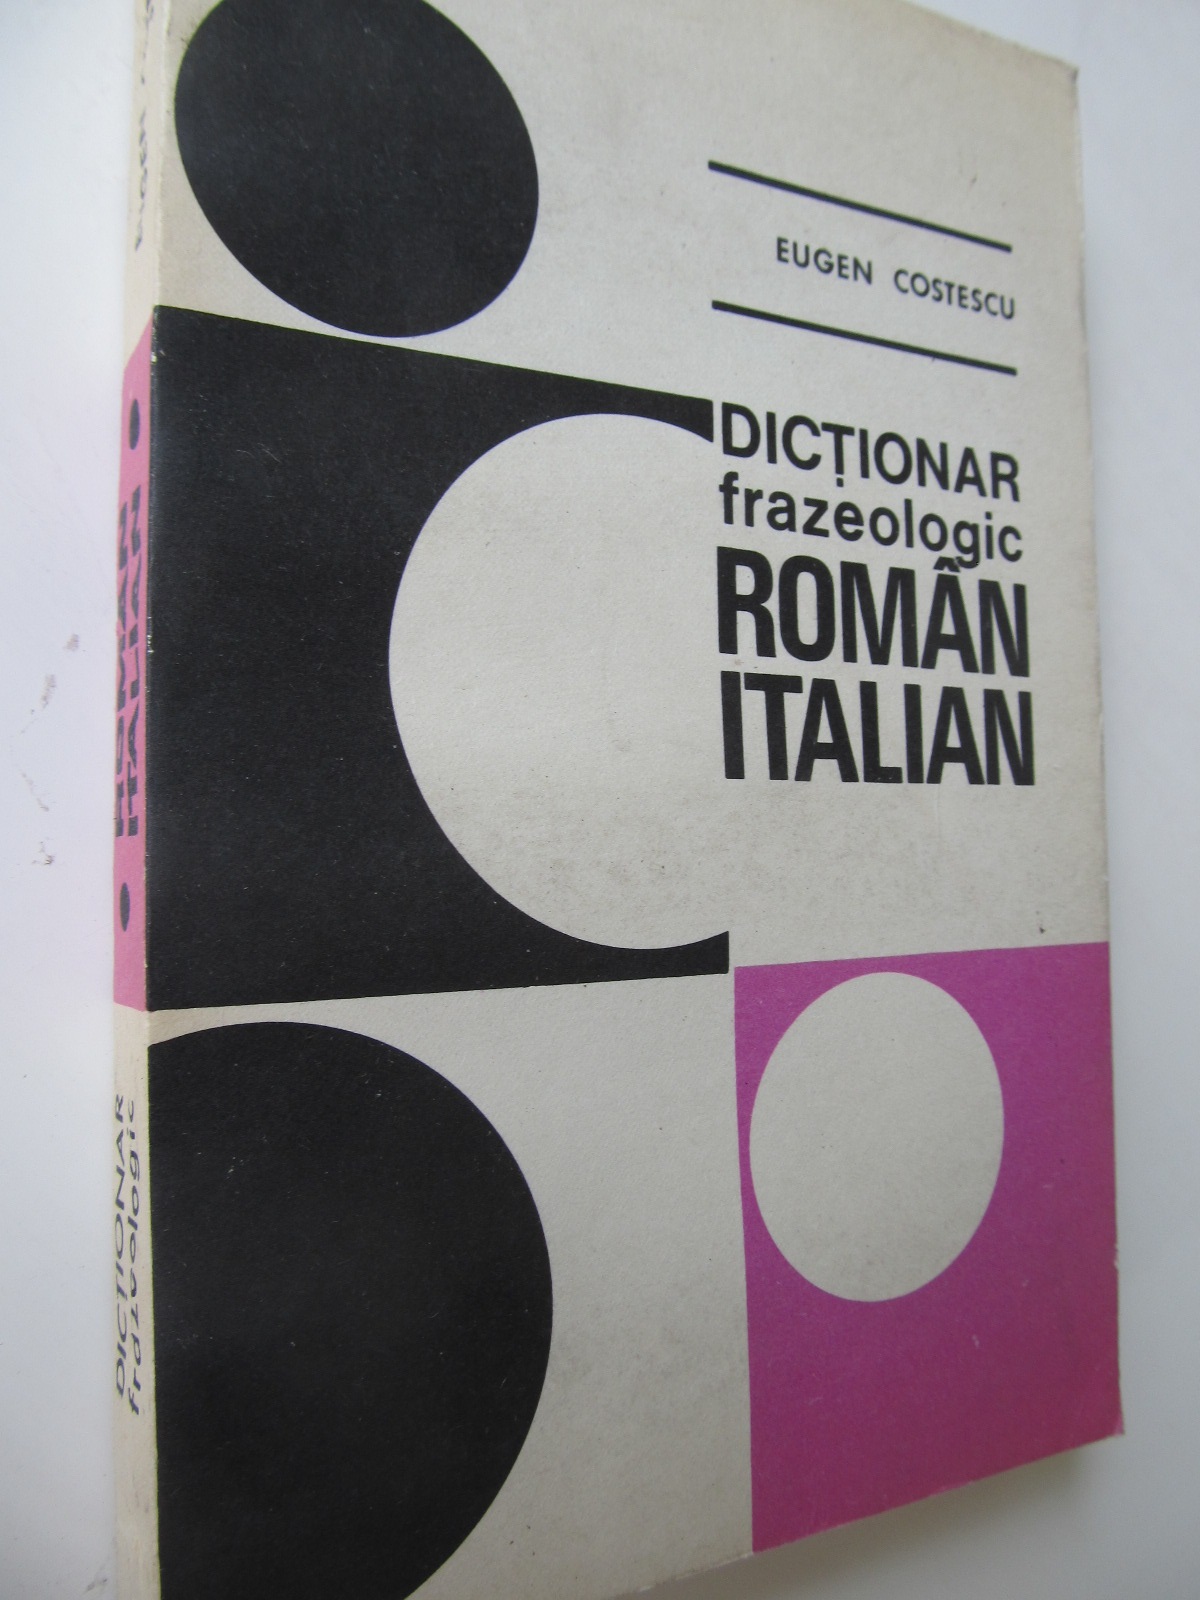 Dictionar frazeologic Roman Italian - Eugen Costescu | Detalii carte